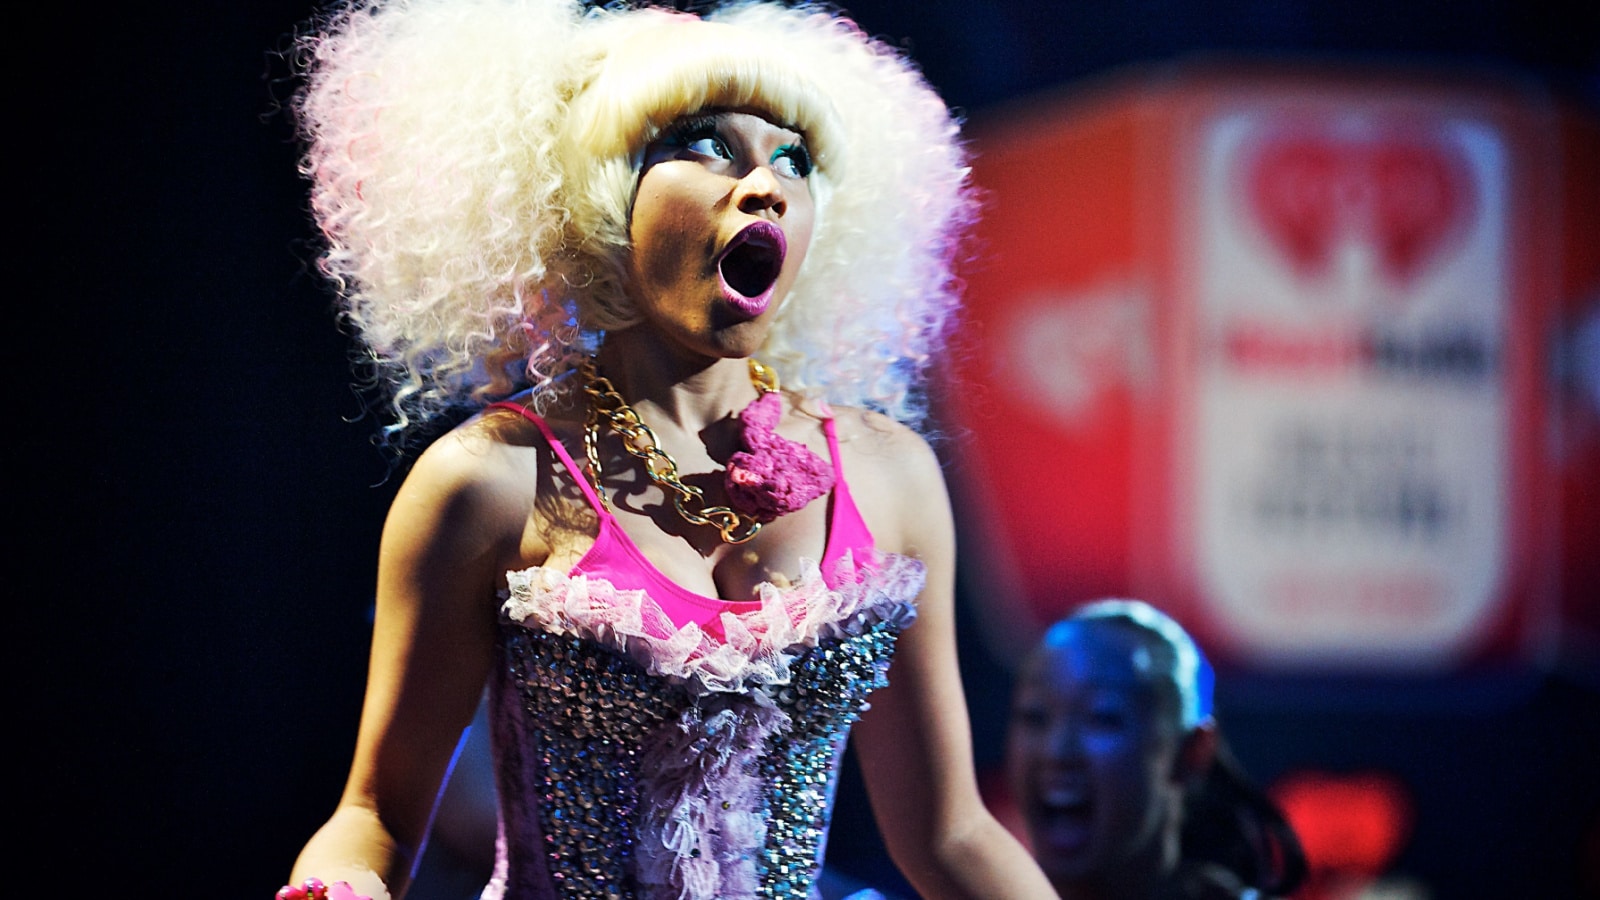 Las Vegas, NV, USA: September 24, 2011 - Nicki Minaj performs at the inaugural iHeartRadio Music Festival at the MGM Grand Garden Arena.